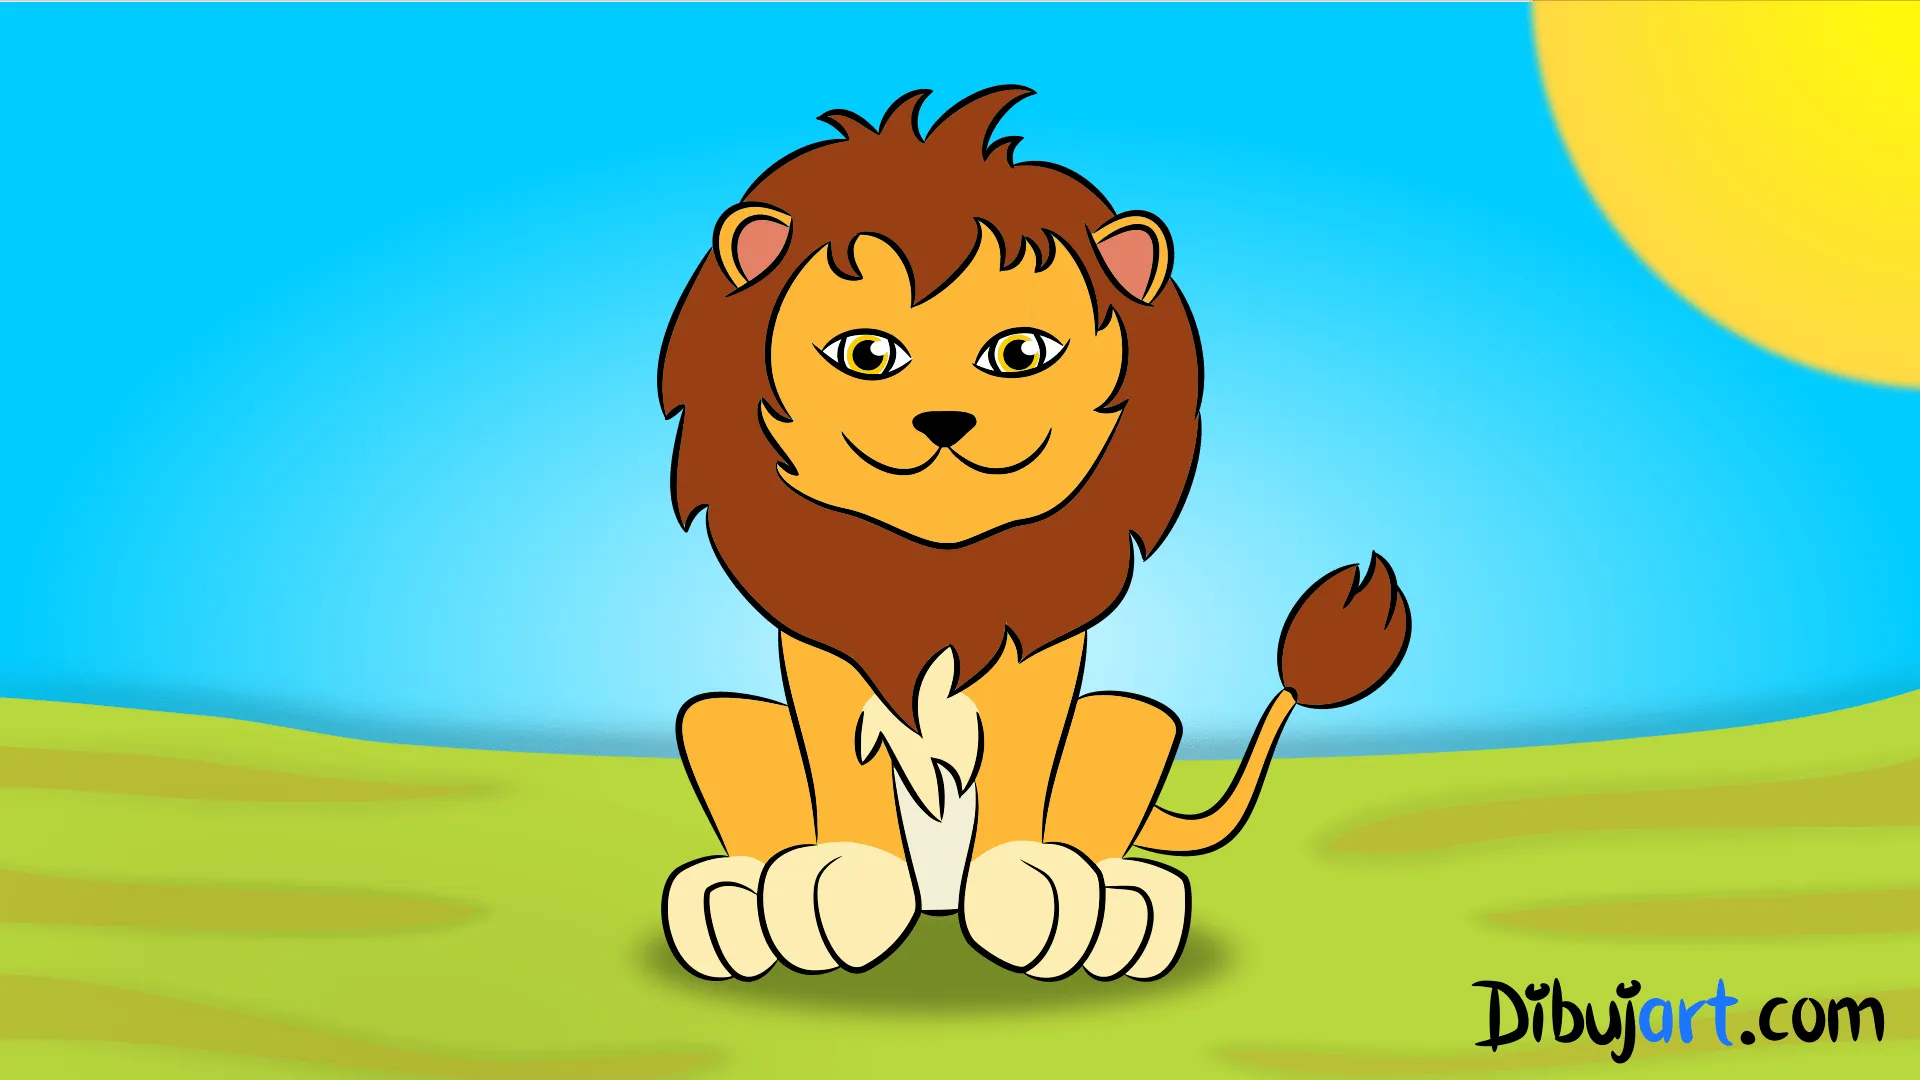 Cómo dibujar un León el rey de la Selva paso a paso | dibujart.com